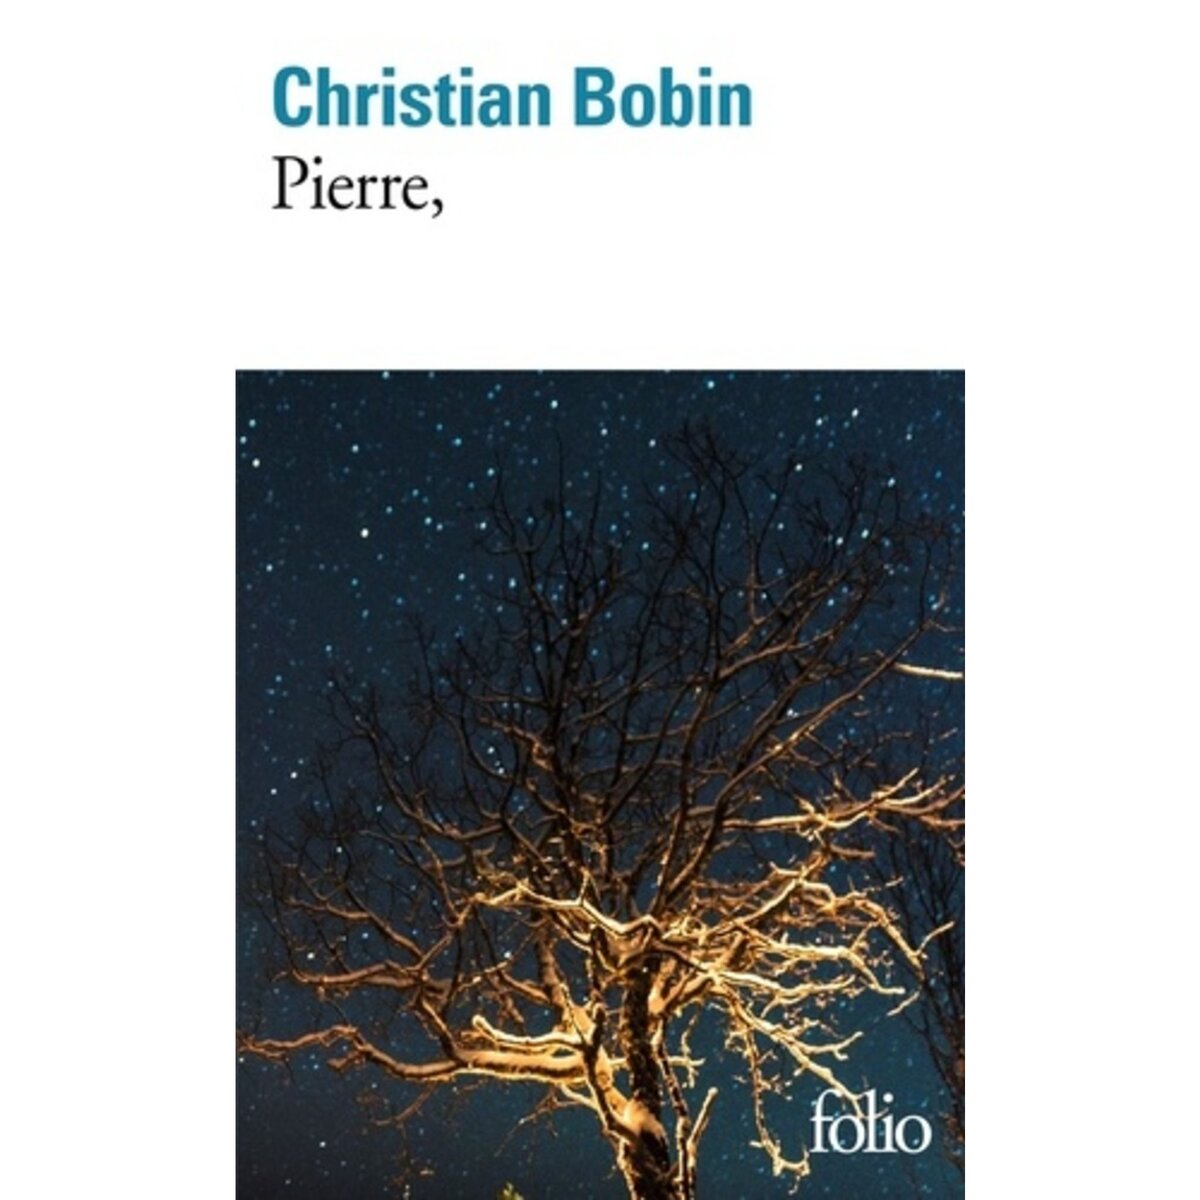  PIERRE,, Bobin Christian